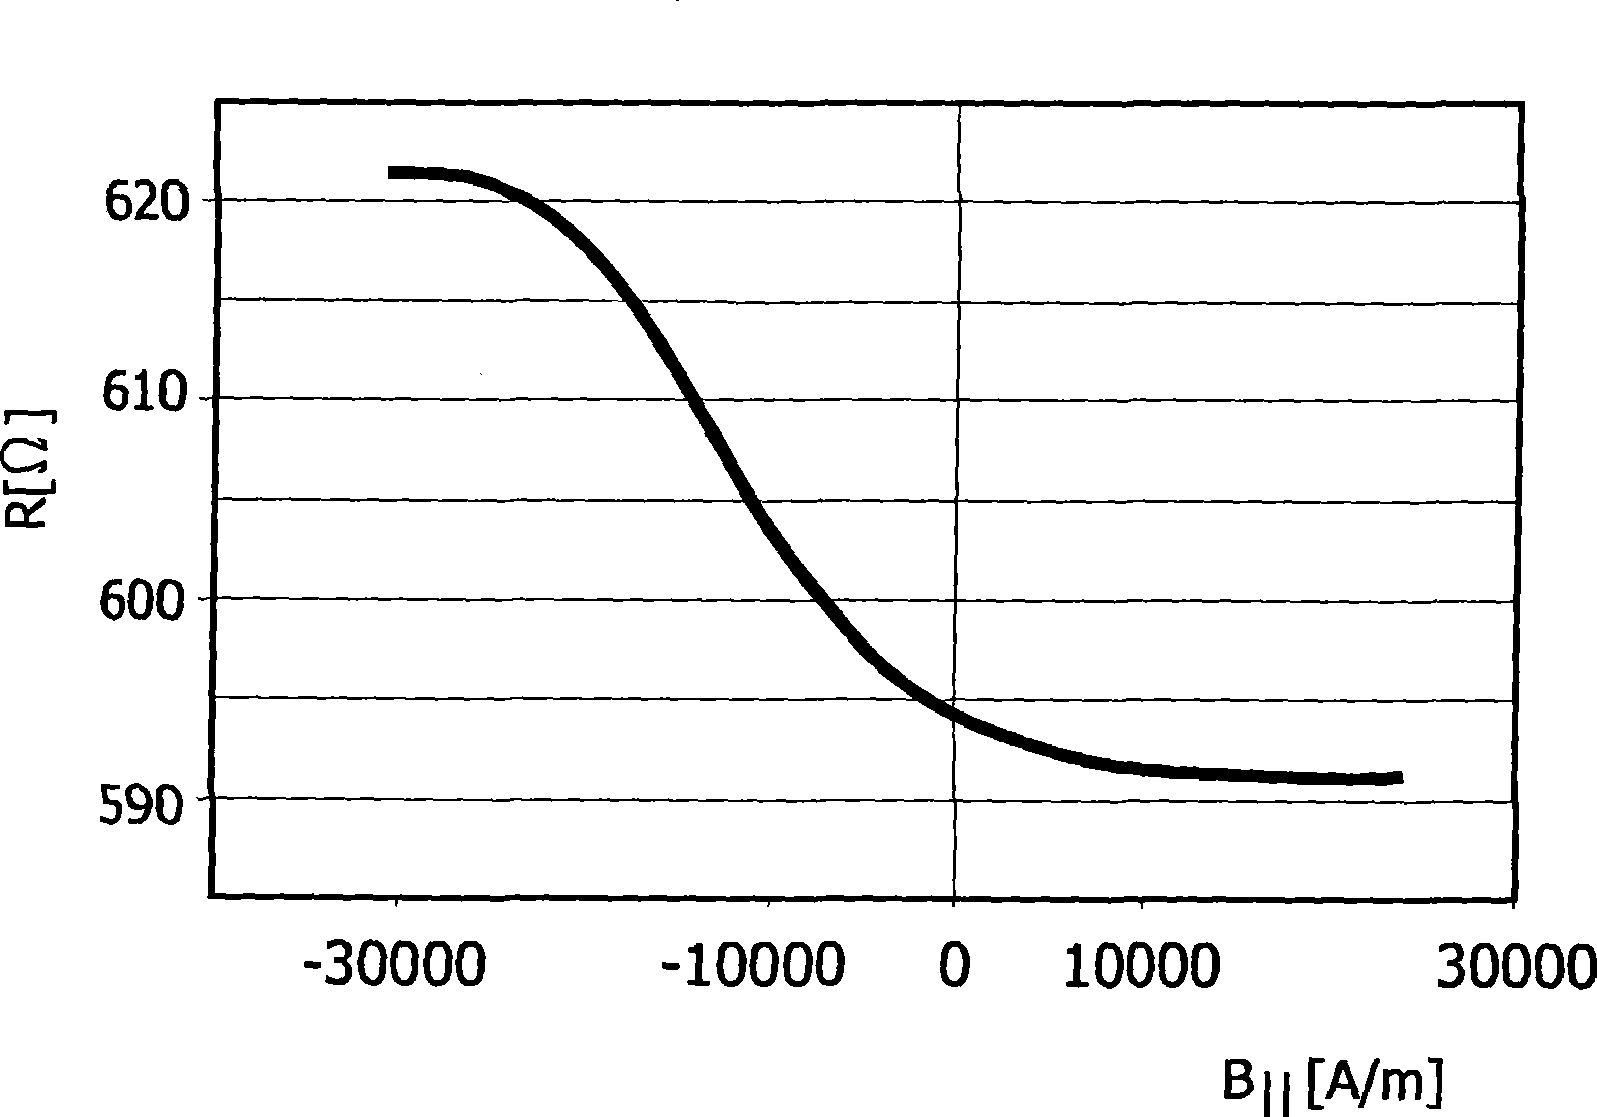 Calibration of a magnetic sensor device